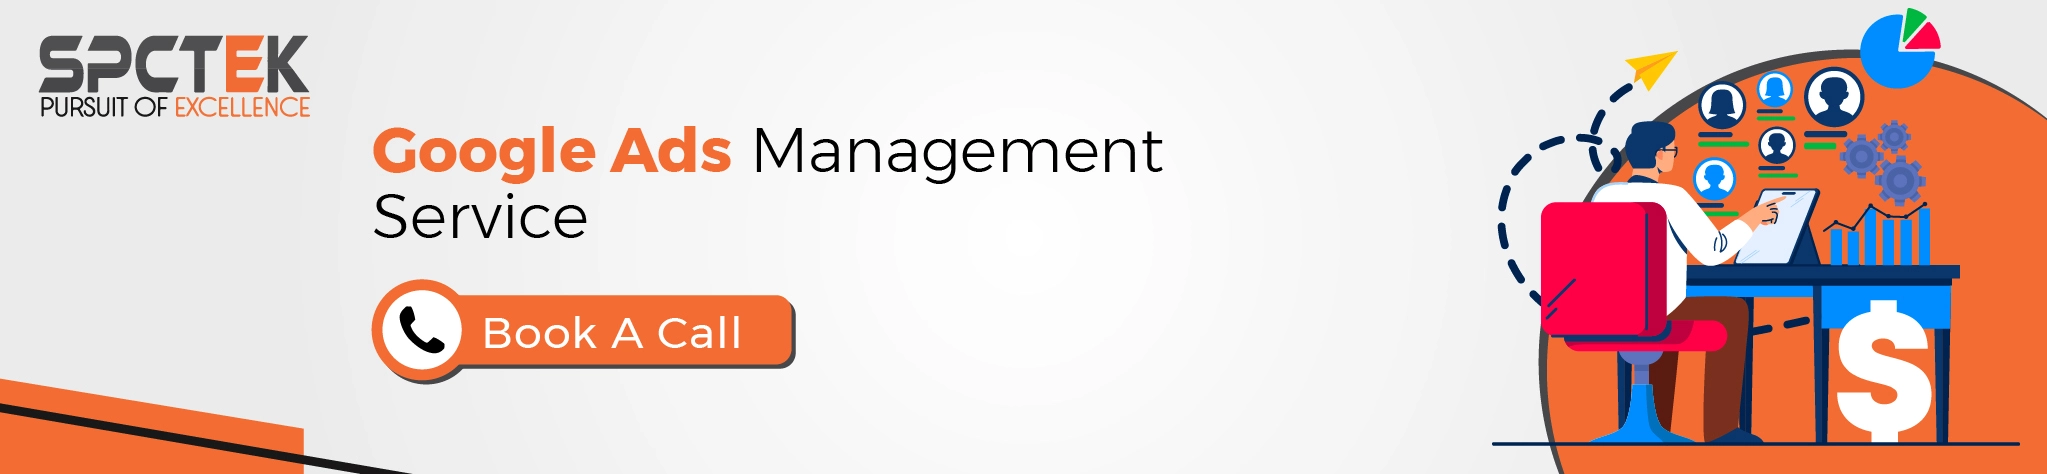 Google ads management service